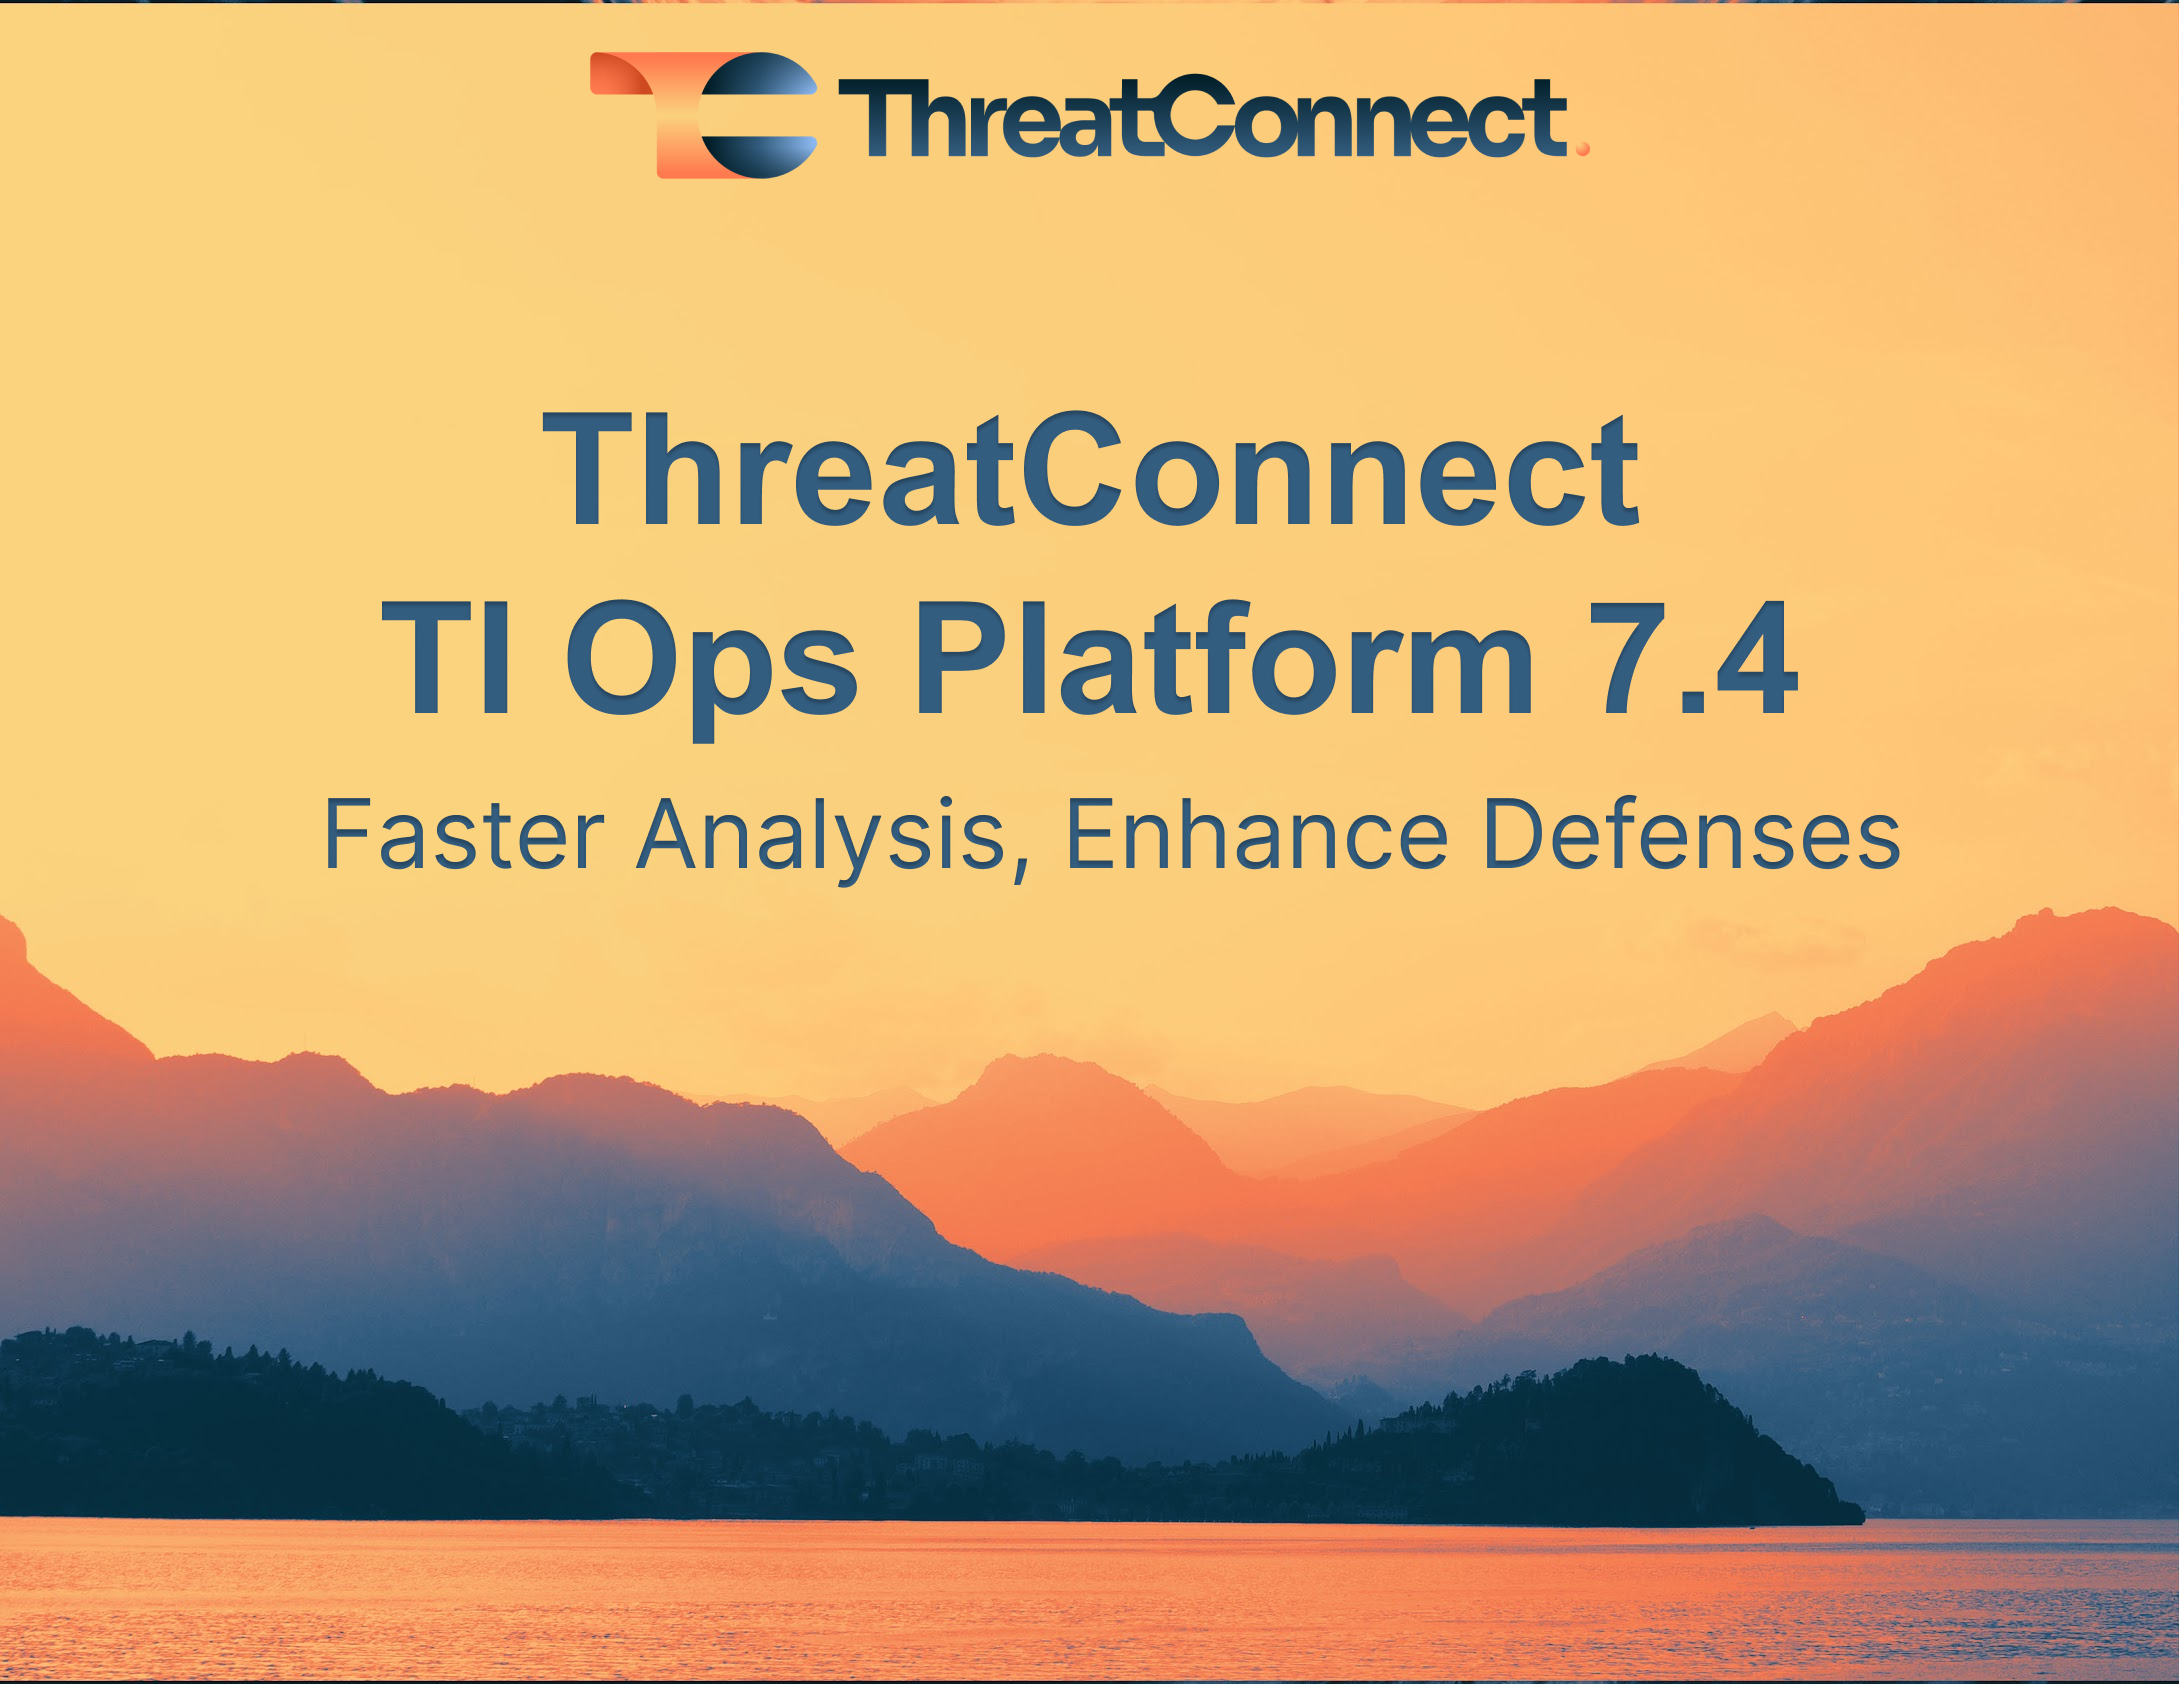 an advertisement for ThreatConnect ti ops platform 7.4